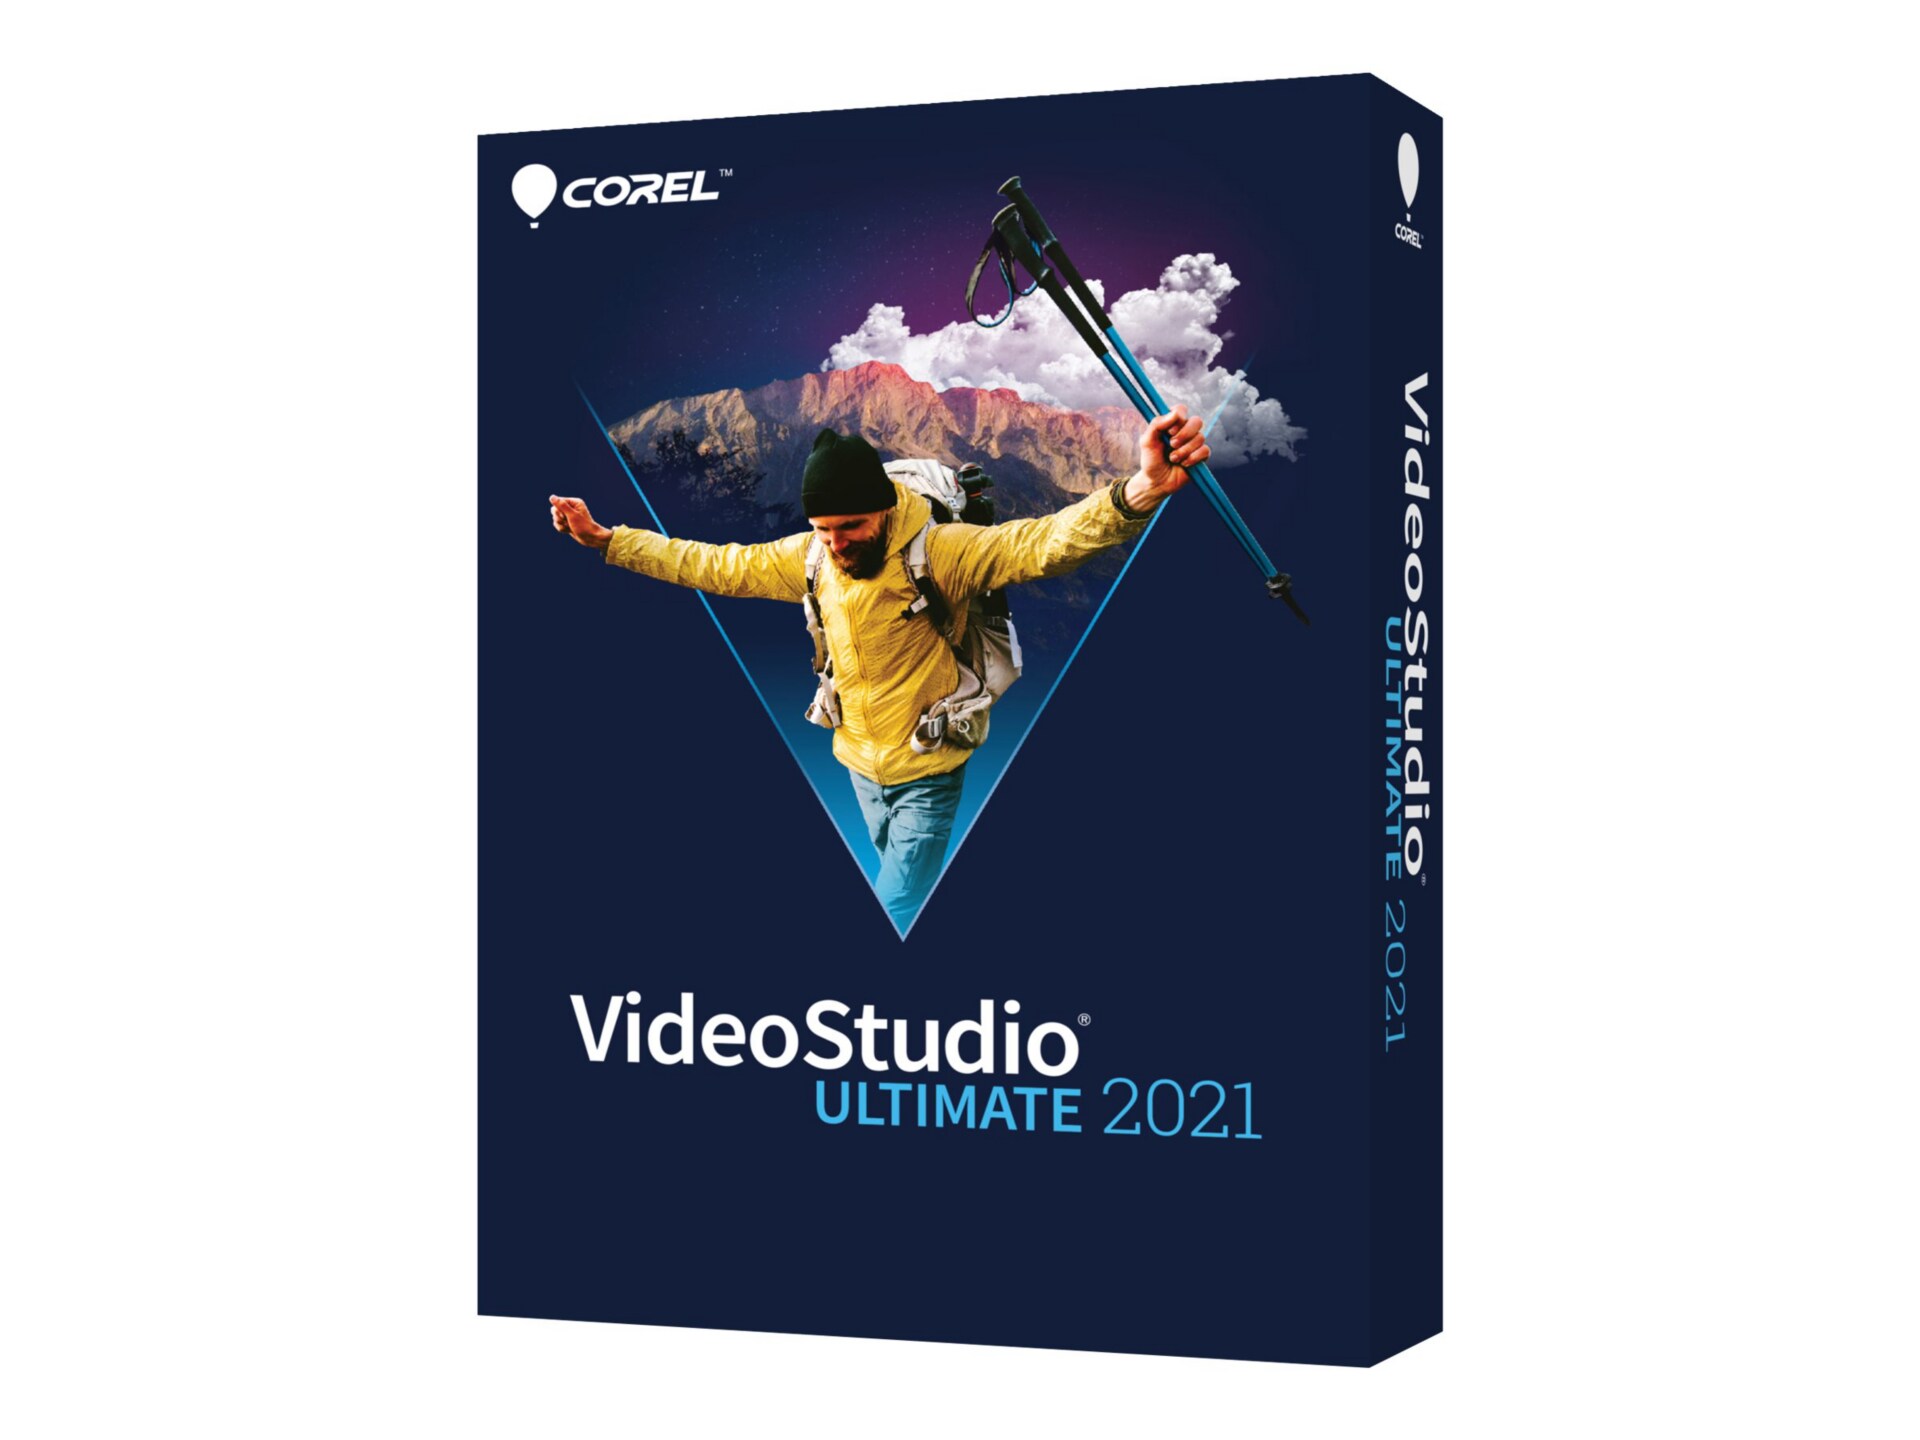 COREL VIDEOSTUDIO 2021 ULT BOX